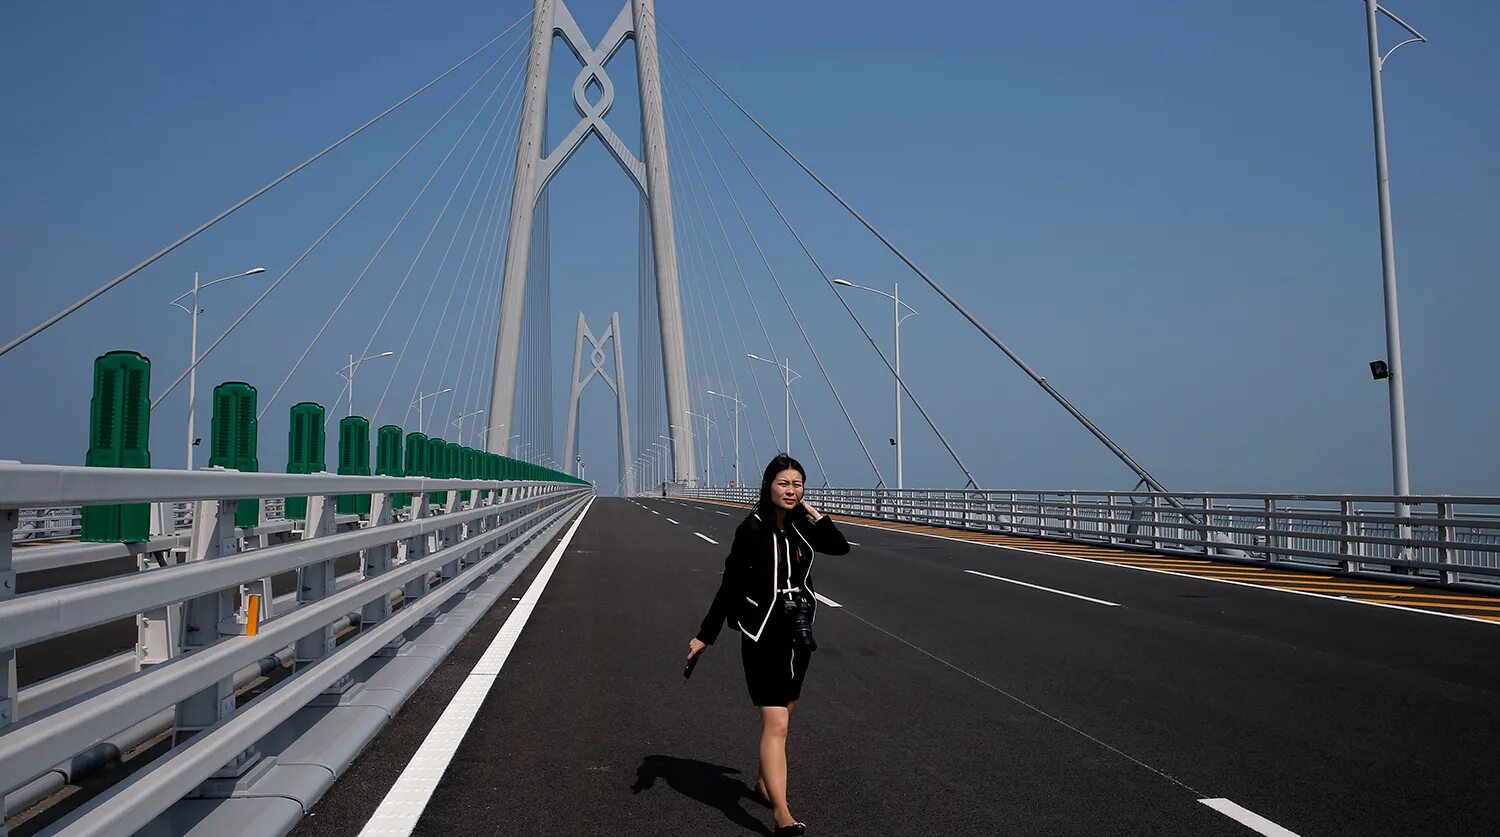 Какой длины мост. Мост Гонконг - Чжухай - Макао. Даньян Куньшаньский мост. Мост руи в Китае. Самый длинный мост в мире, Китай. Даньян-Куньшаньский виадук.